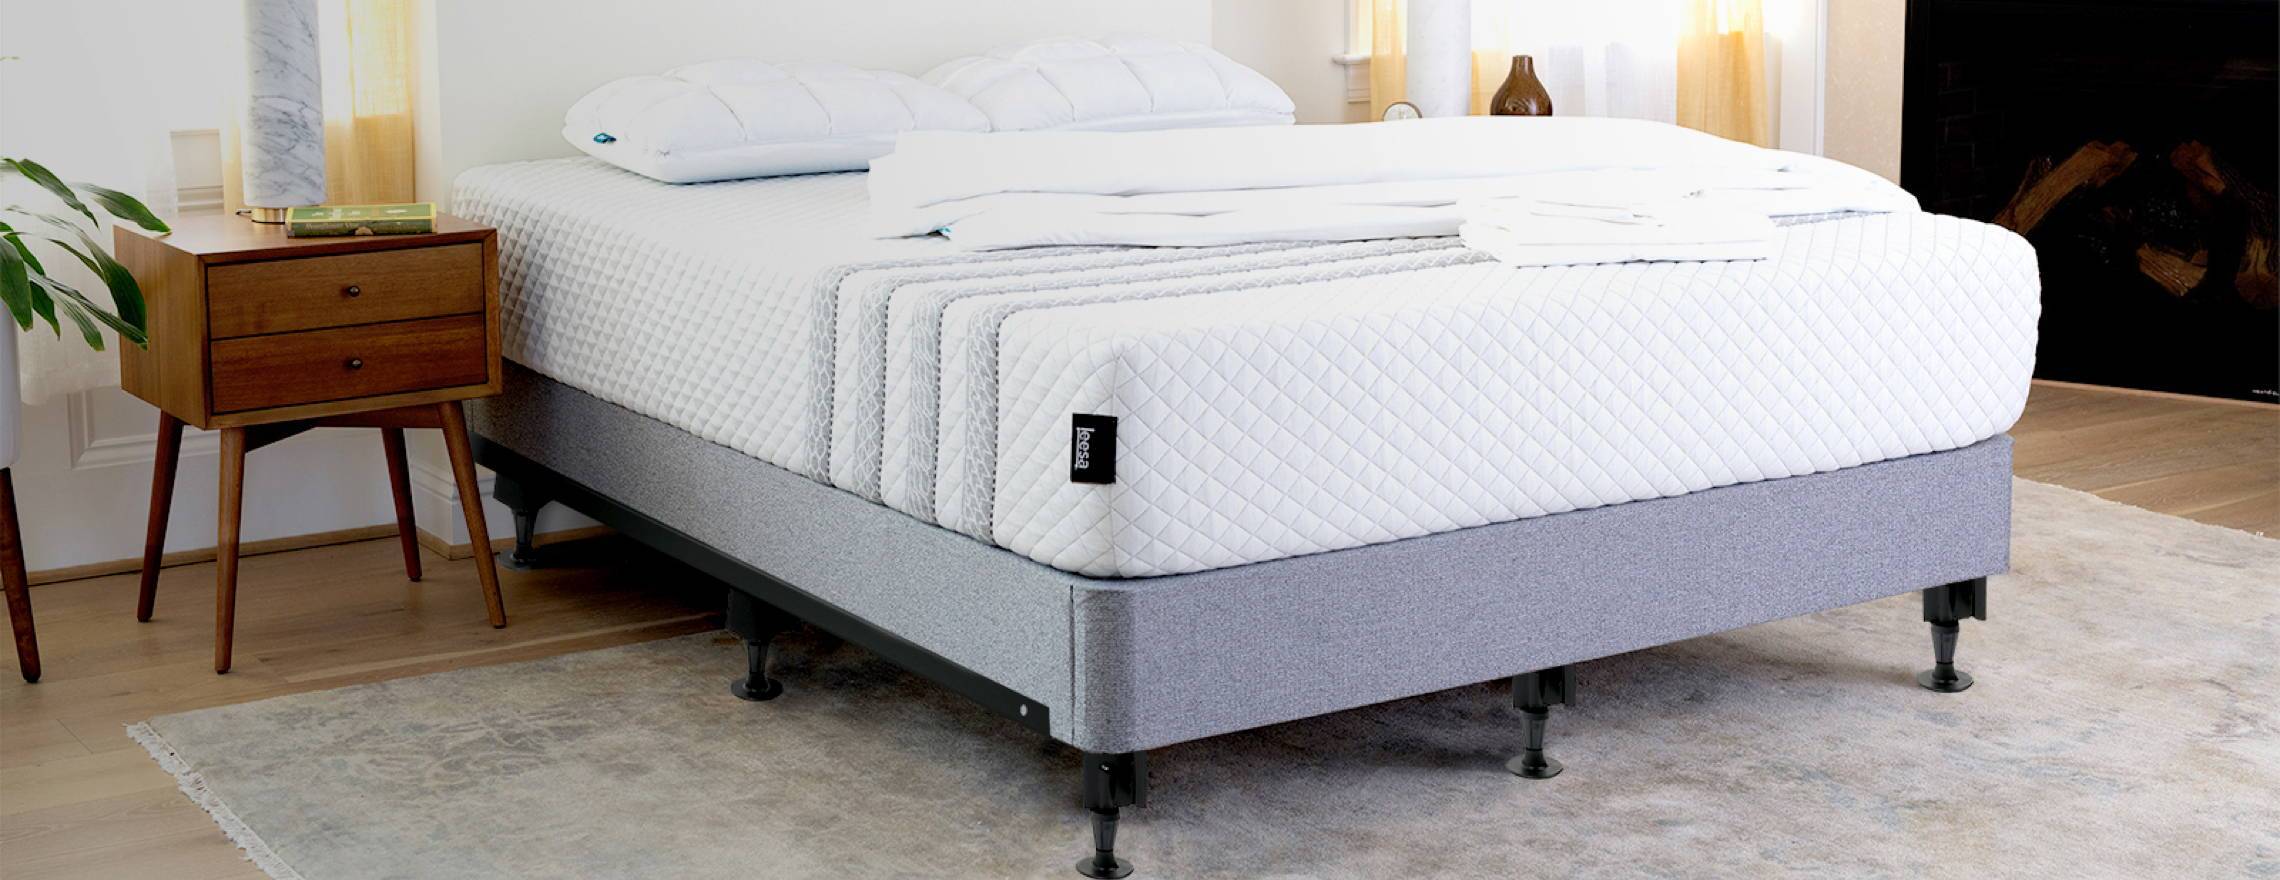 Hybrid Mattress, Do Box Springs Make Beds More Comfortable